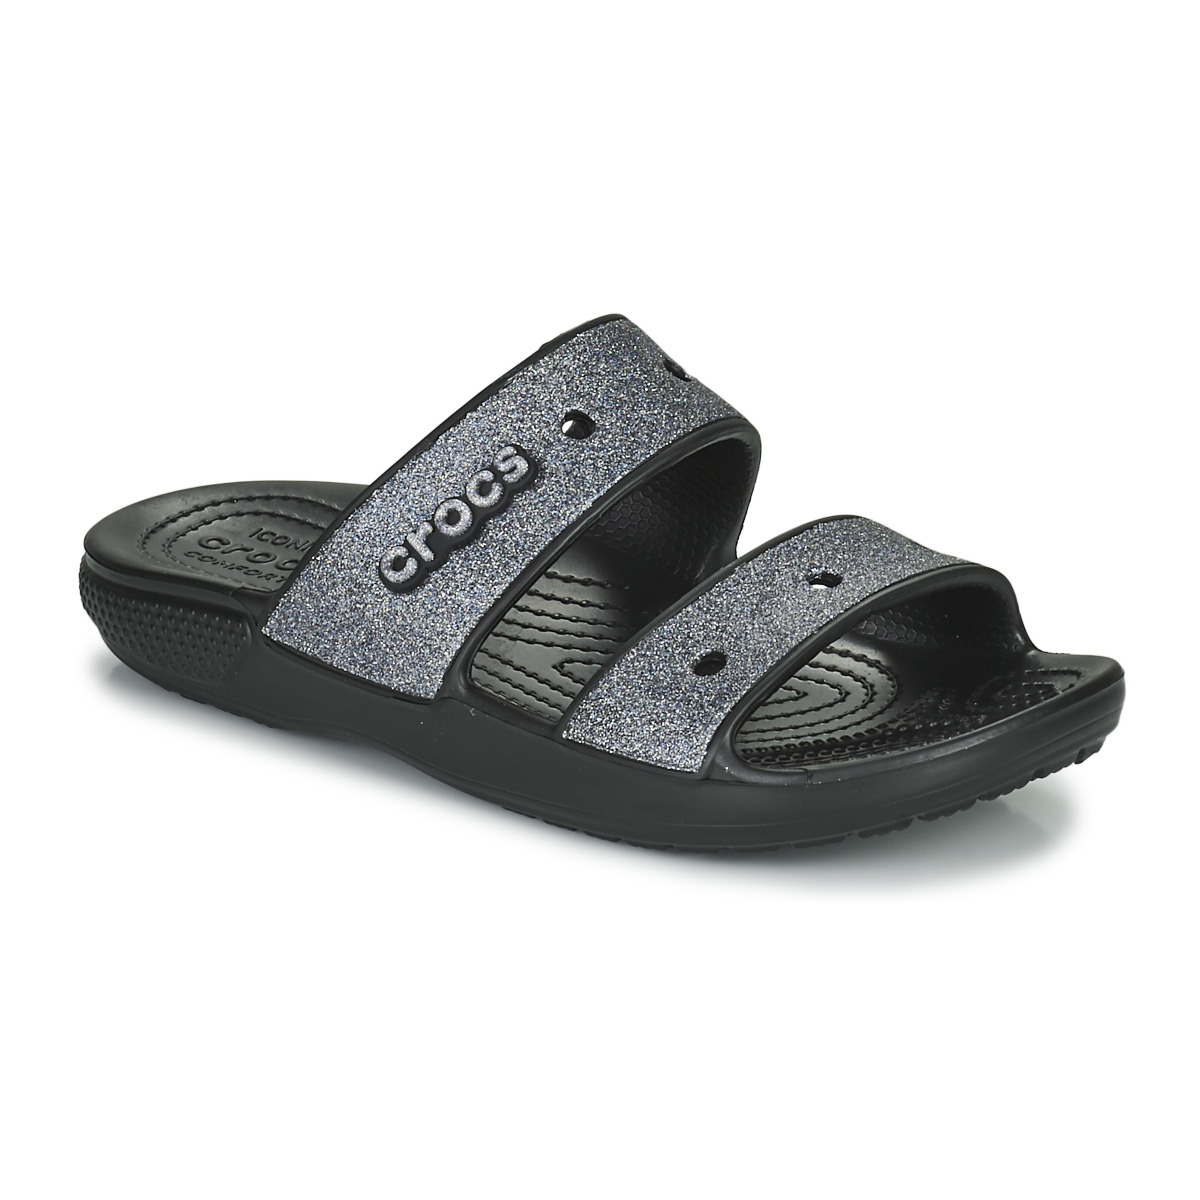 Crocs - Women's Slippers - Black - Spartoo GOOFASH